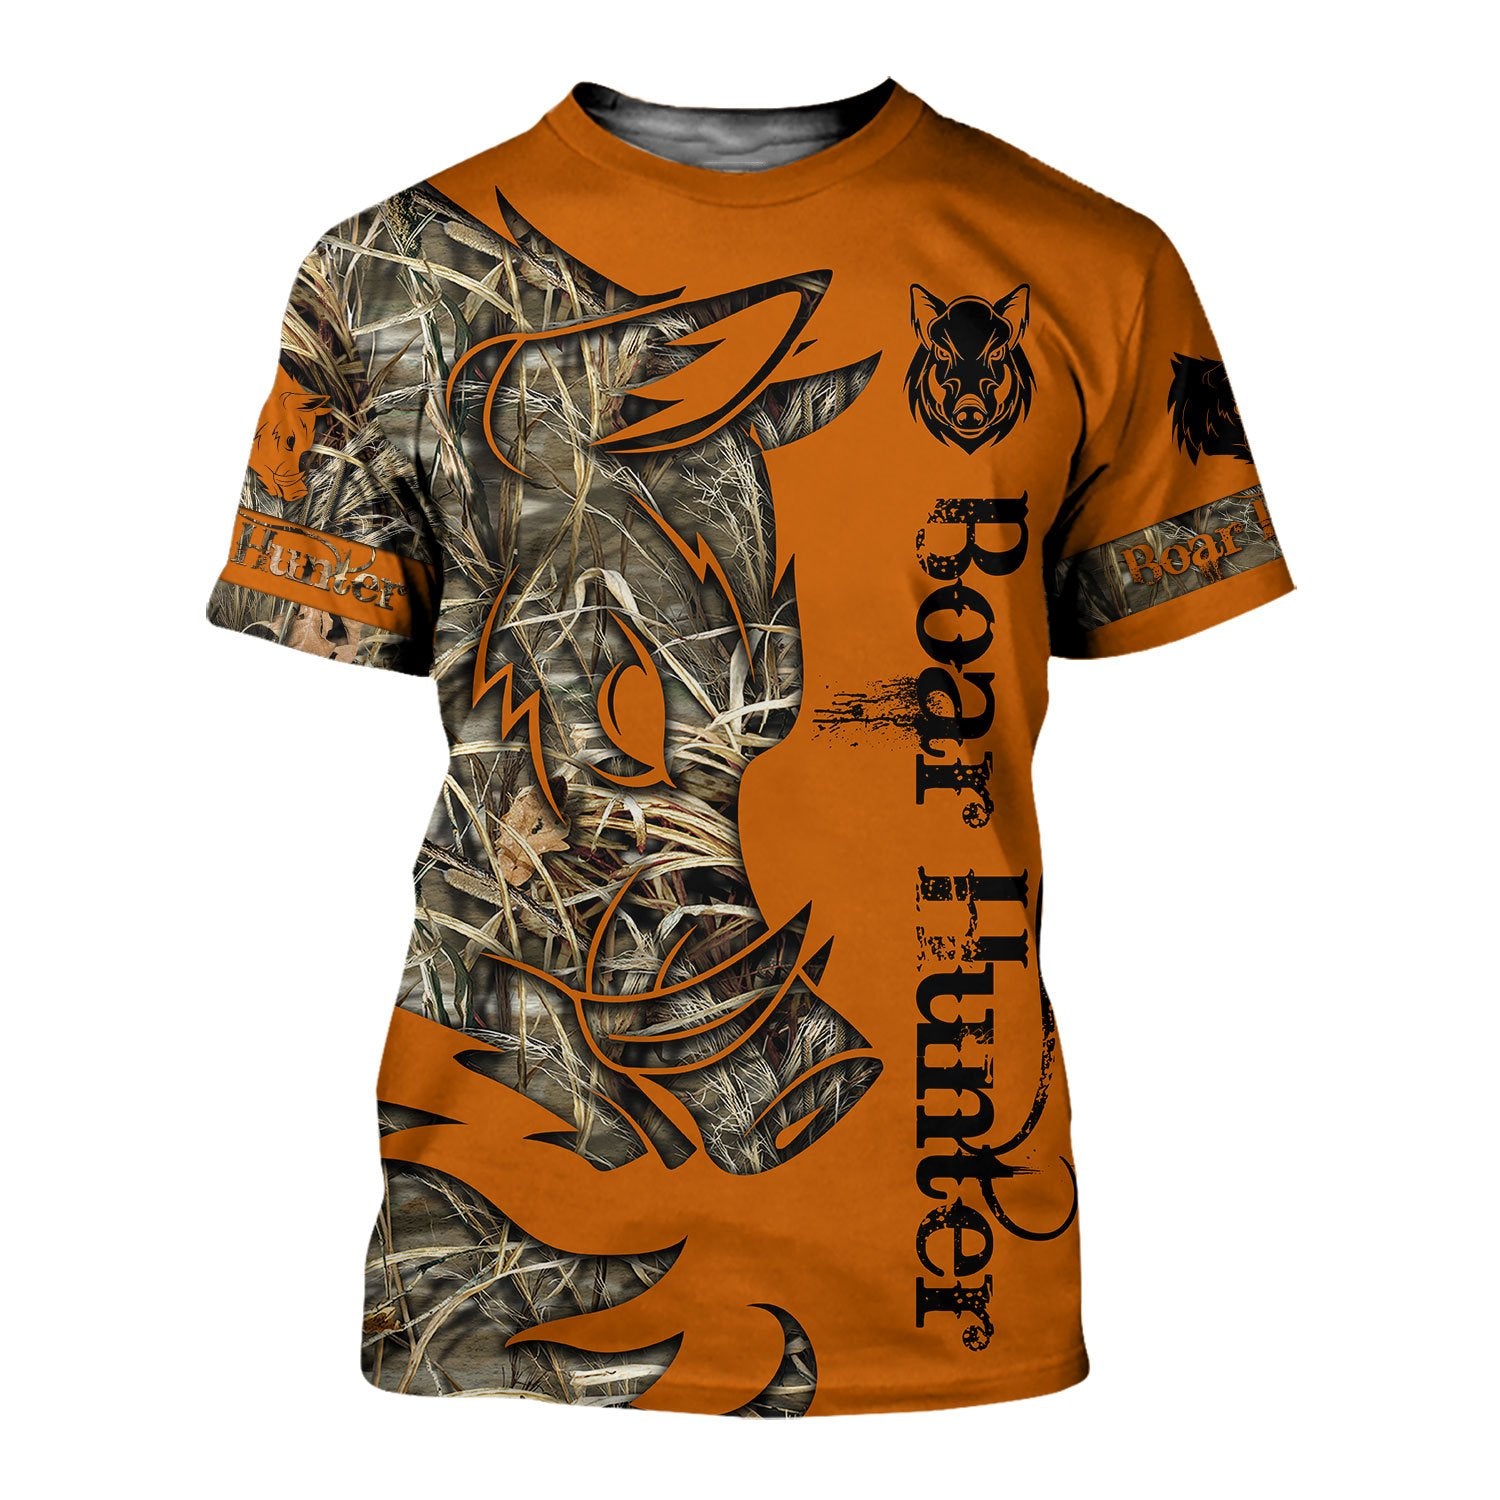 Buy a men's boar hunting t-shirt. Orange, camo and black.